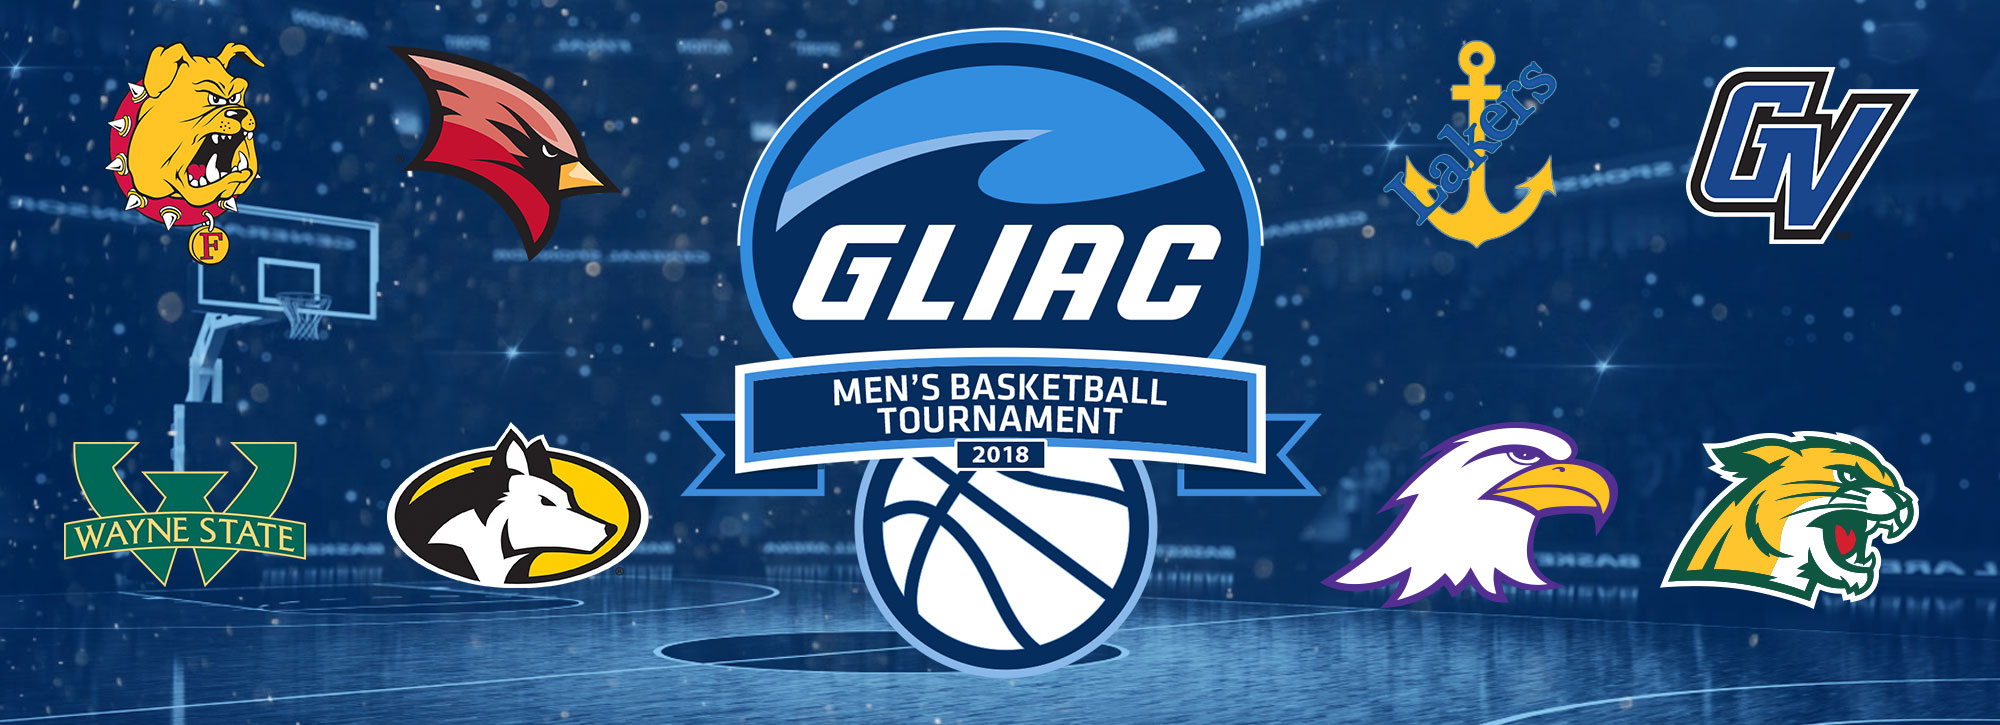 Matchups Finalized for 2018 GLIAC Men's Basketball Tournament